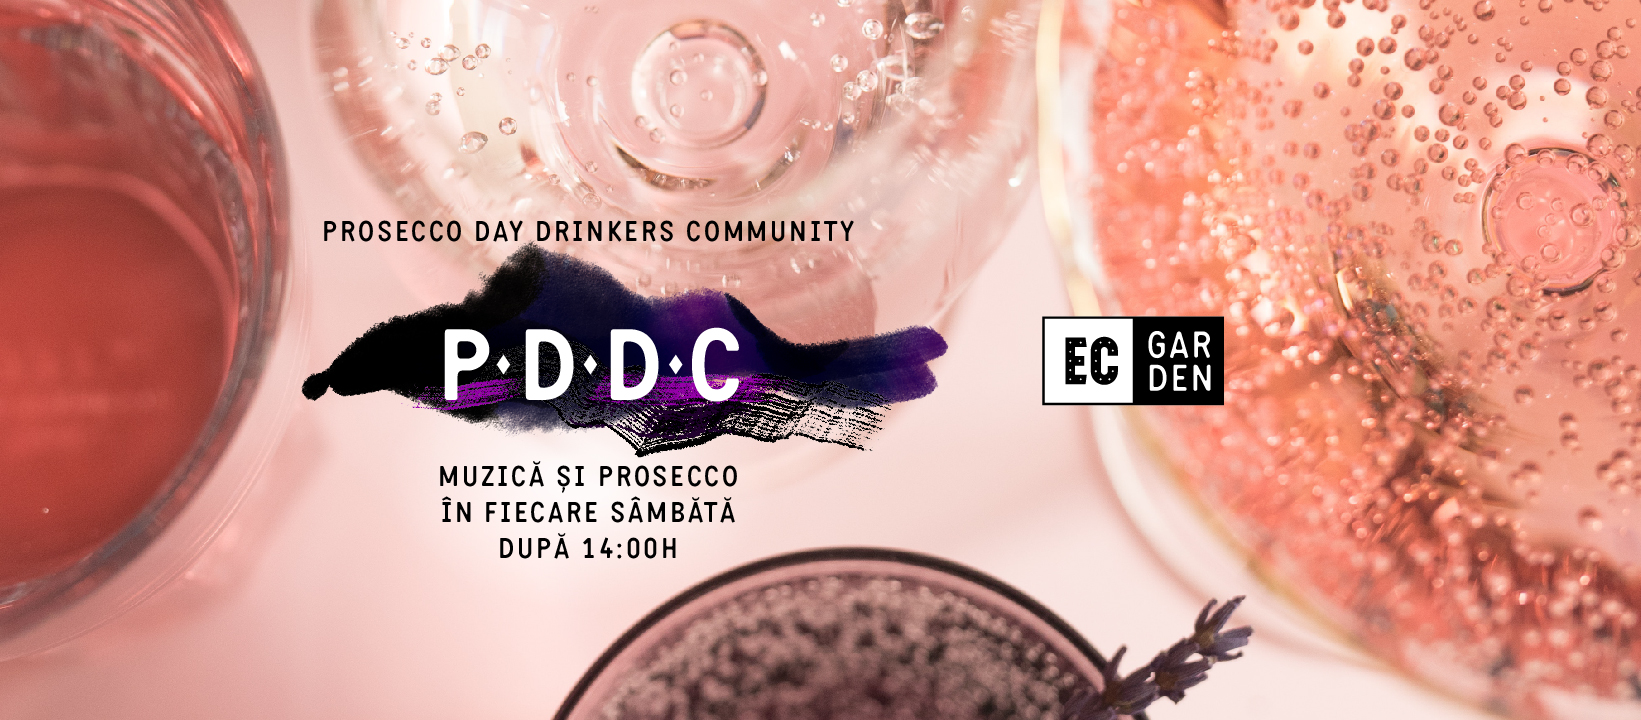 Prosecco Day Drinkers Community @ EC Garden